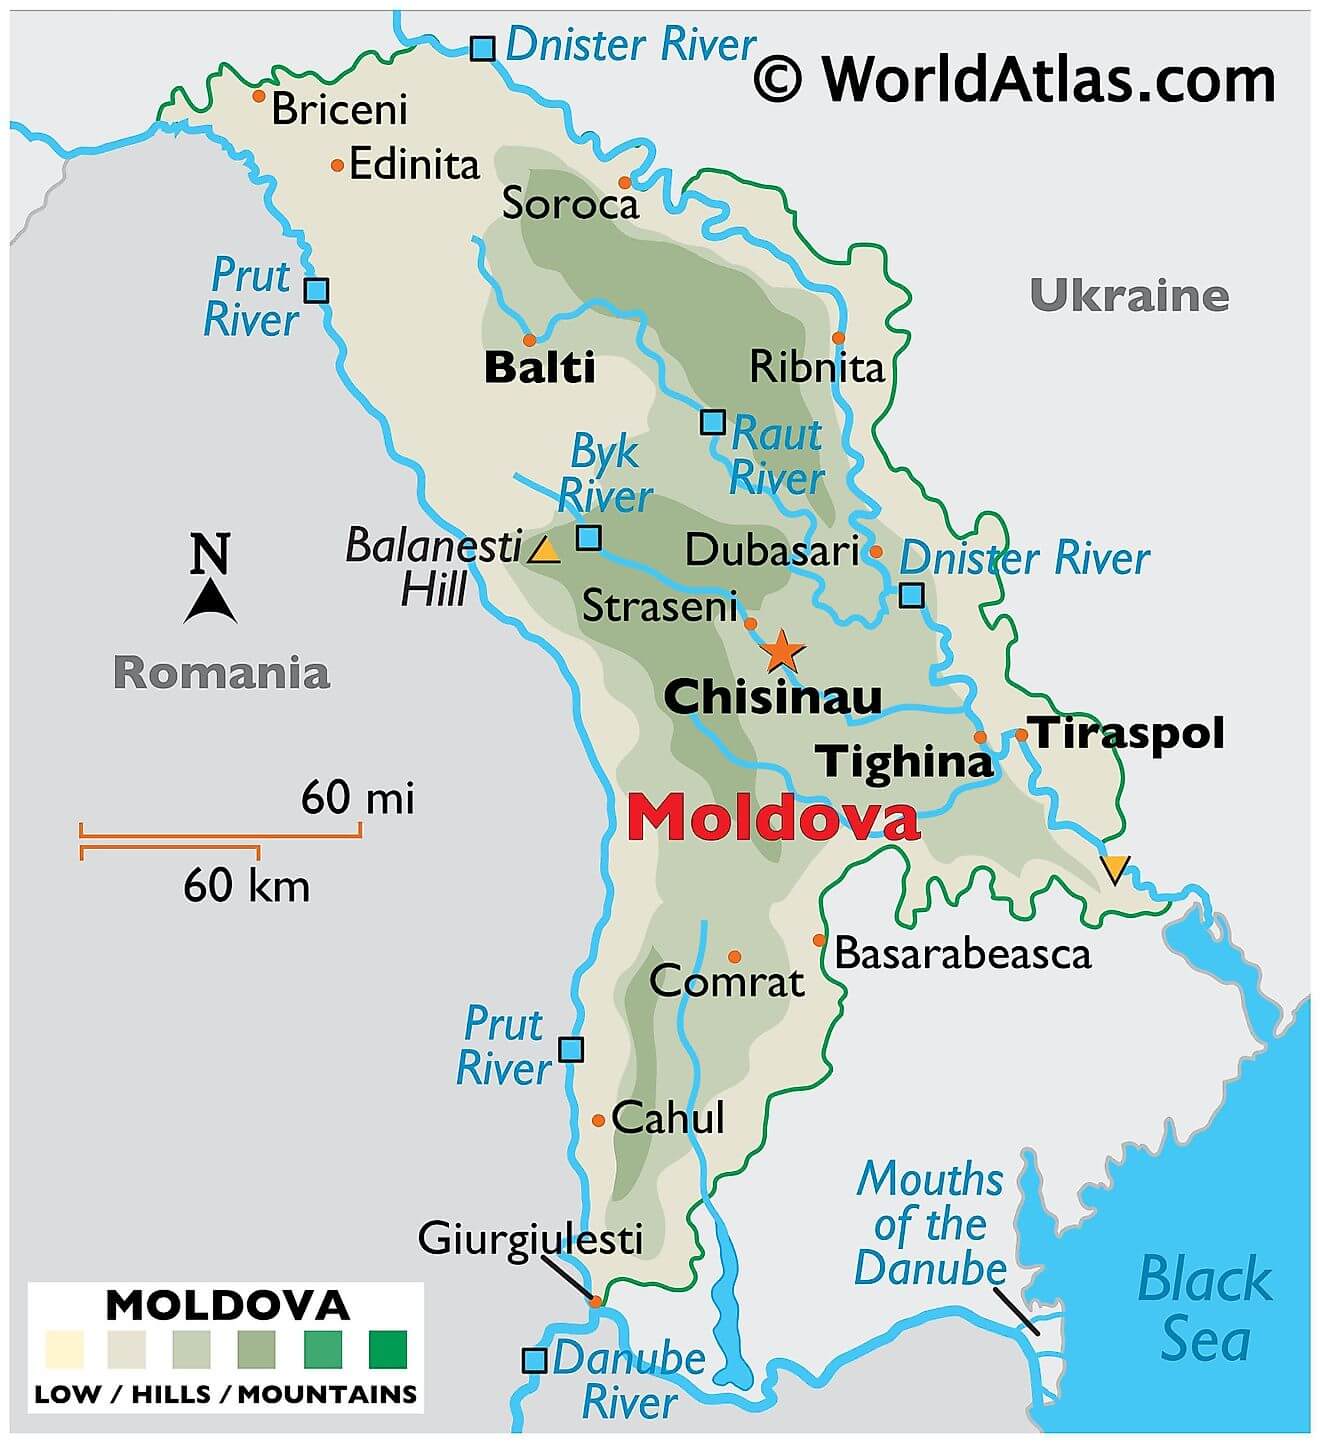 Bản đồ vật lý của Moldova